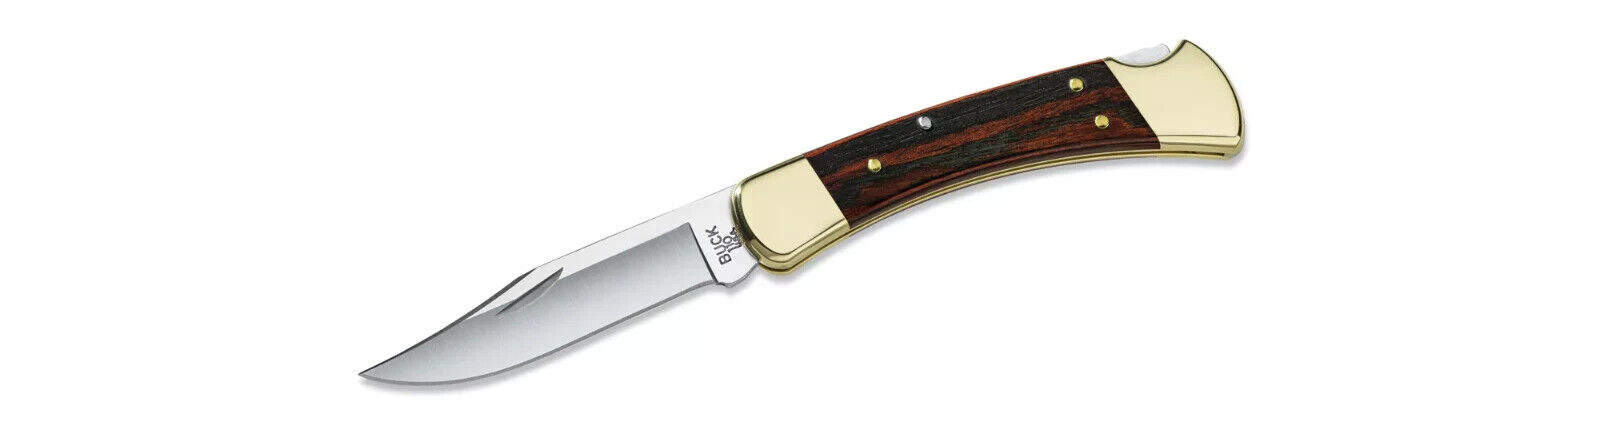 Buck 110 Ebony Folding Hunter Lockback Knife with Leather Sheath - New in Box